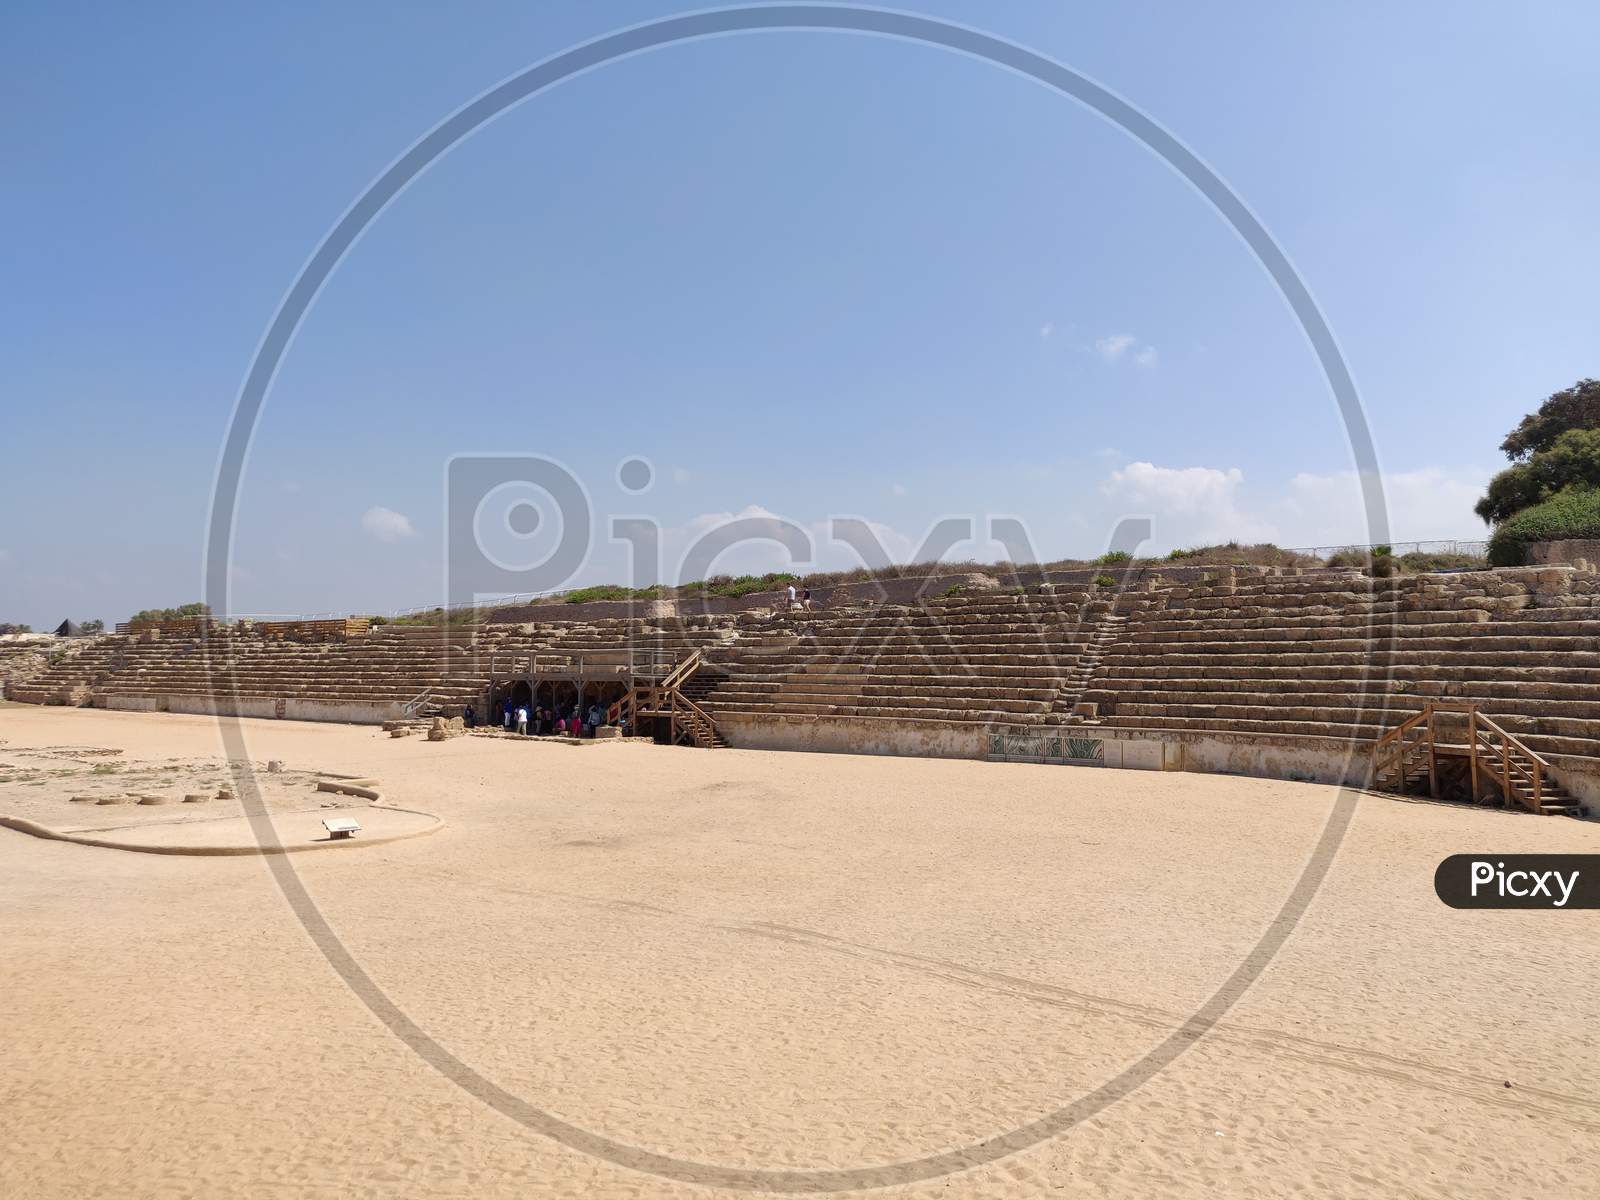 The Ancient Roman Stadium of Caesarea is one of Israel’s wonders